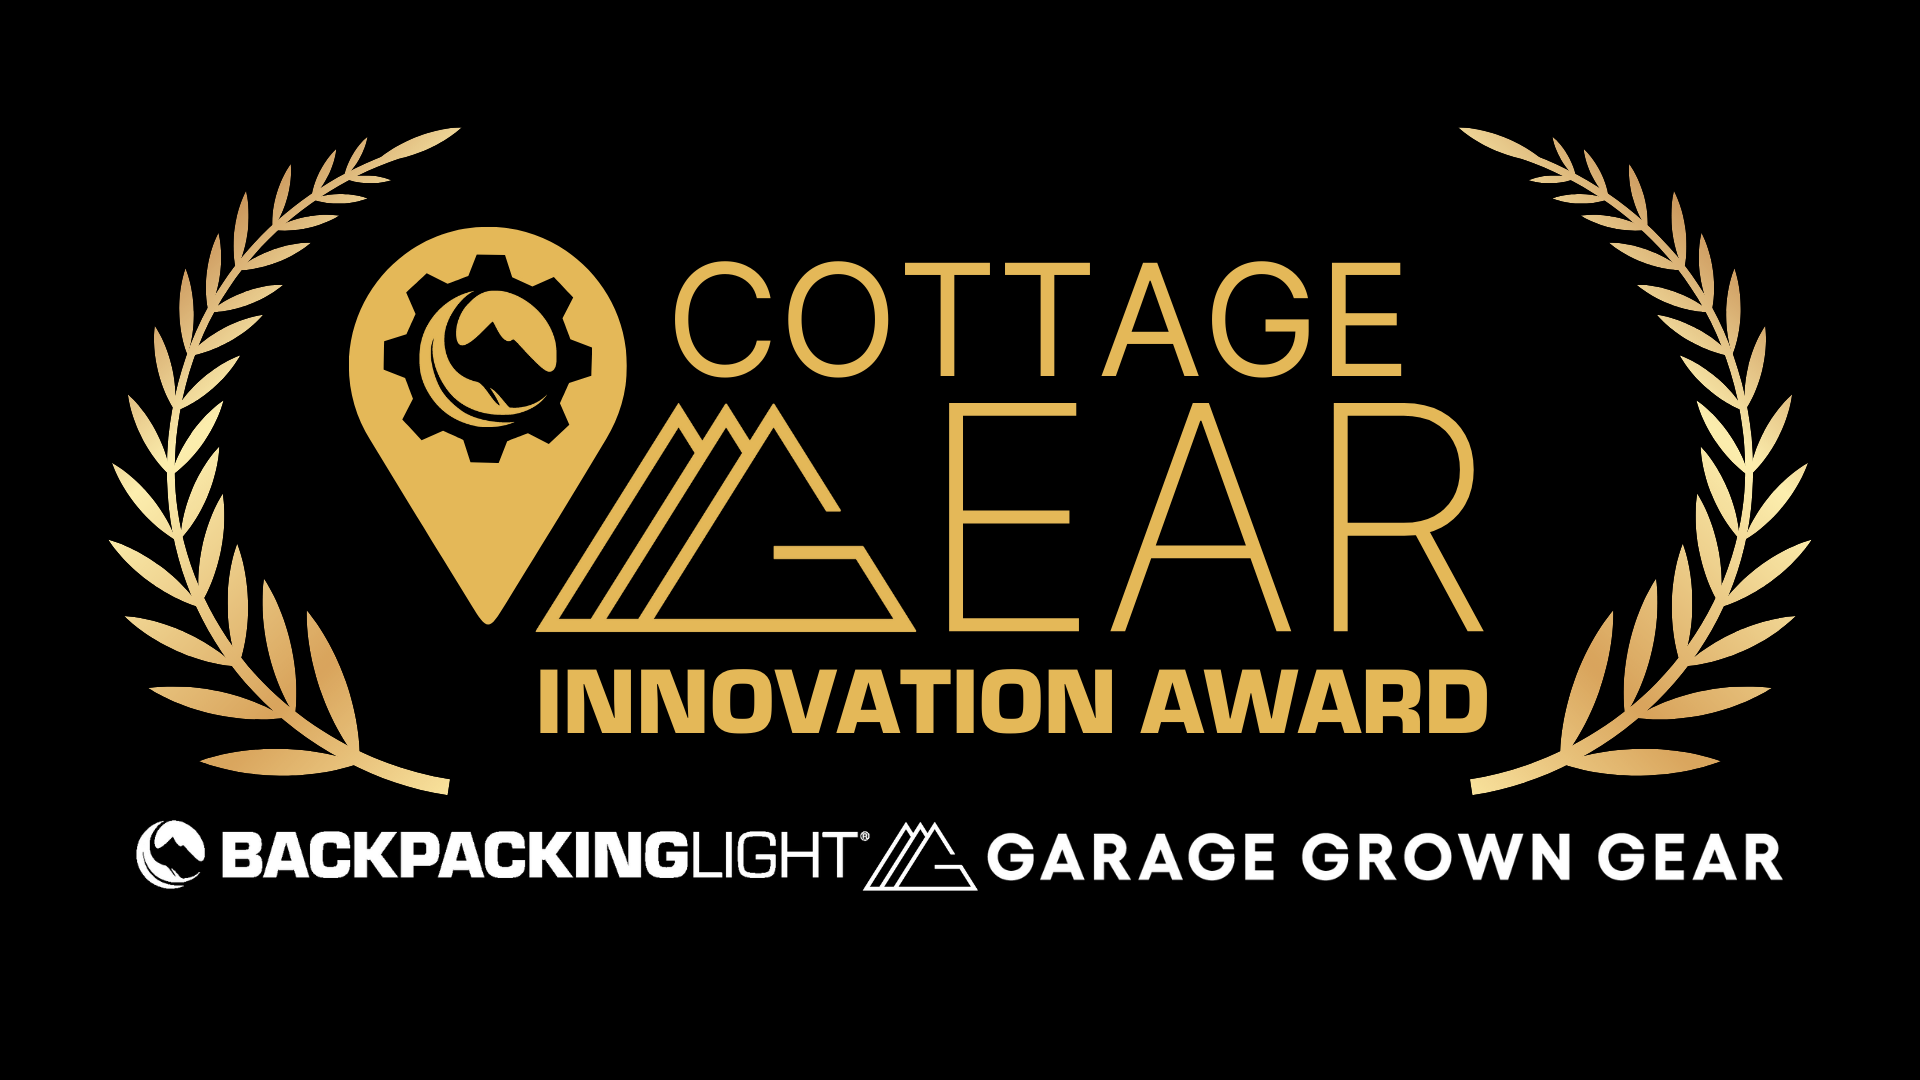 the logo for the innovation award